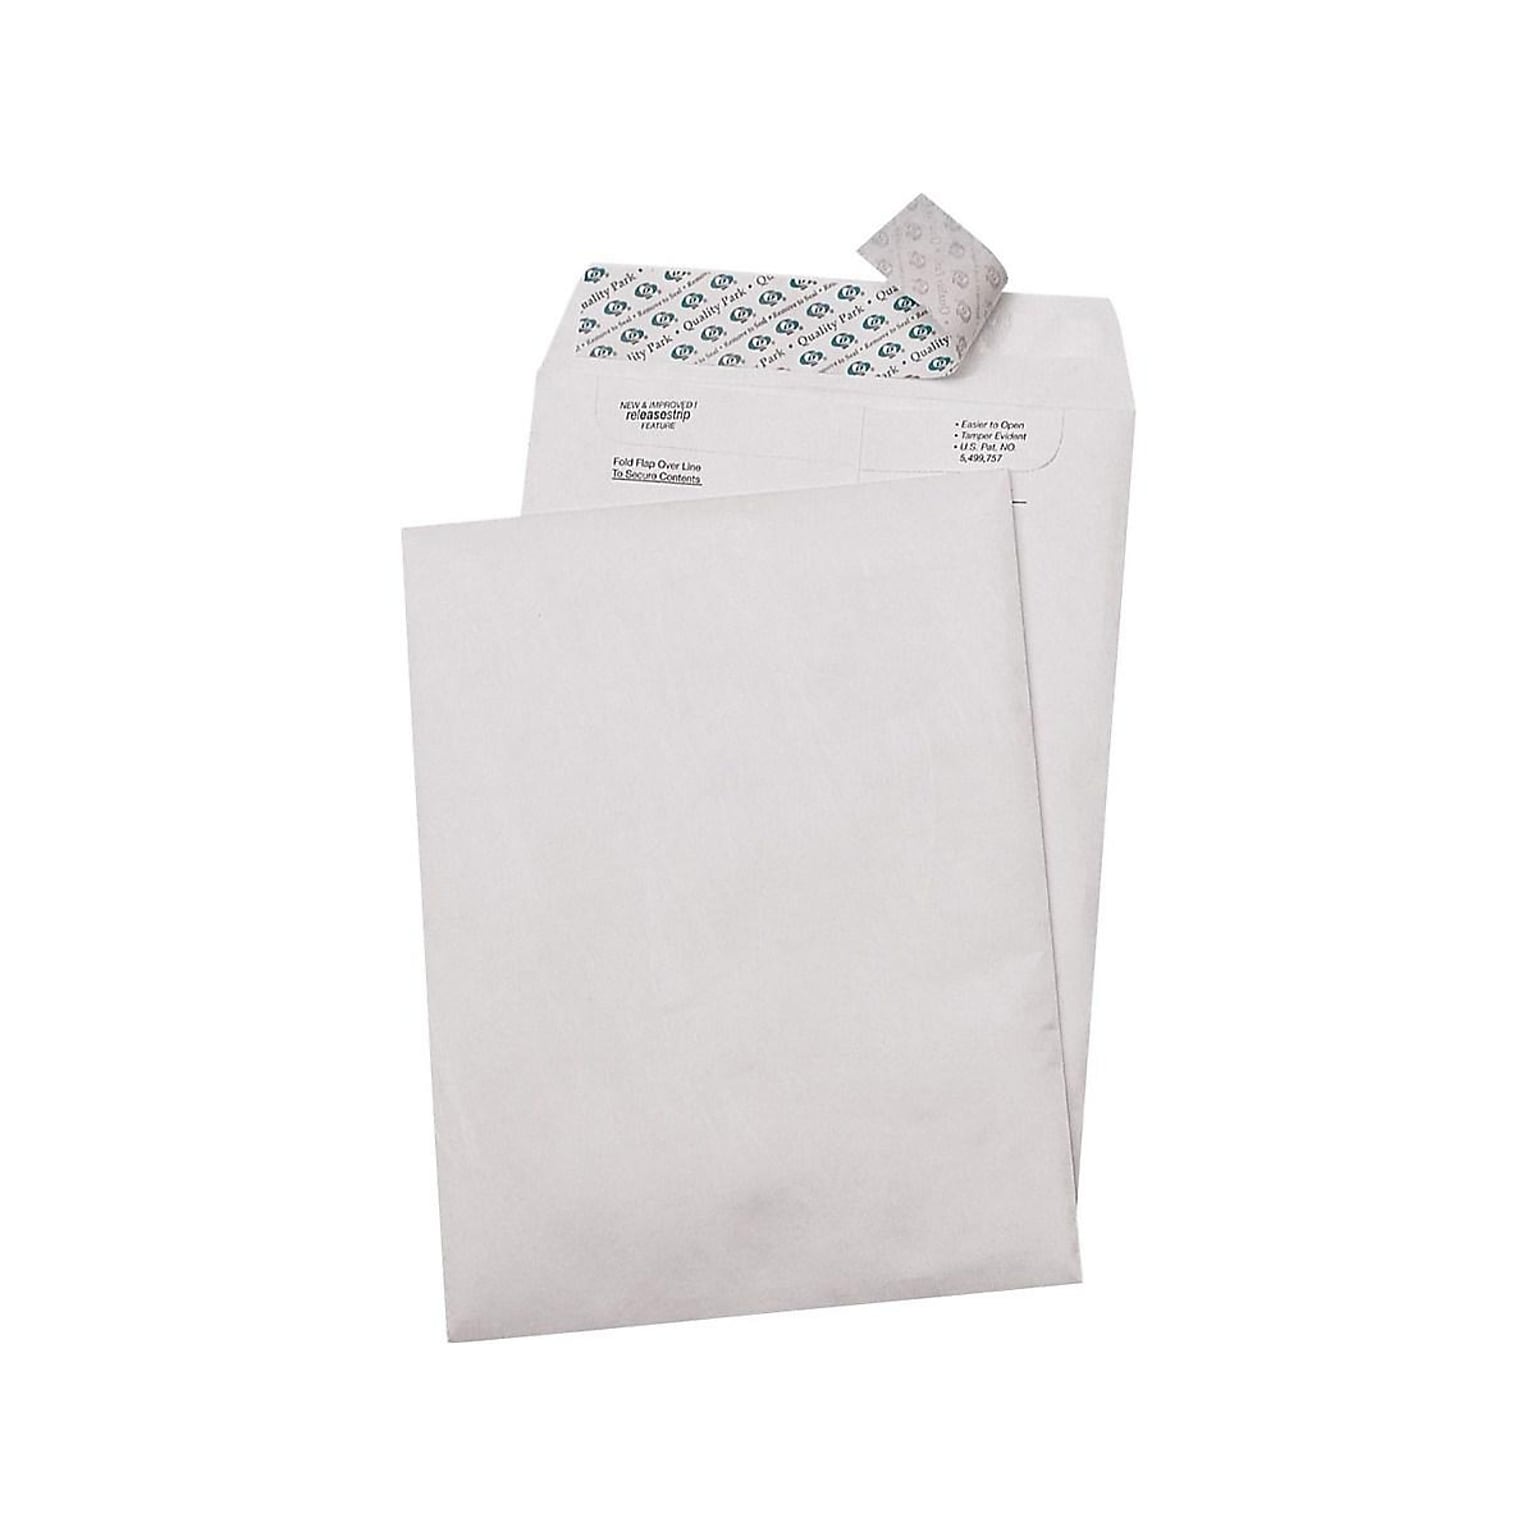 Quality Park Tyvek Survivor Self Seal Catalog Envelopes, 12L x 15.5H, White, 100/Box (QUAR1790)